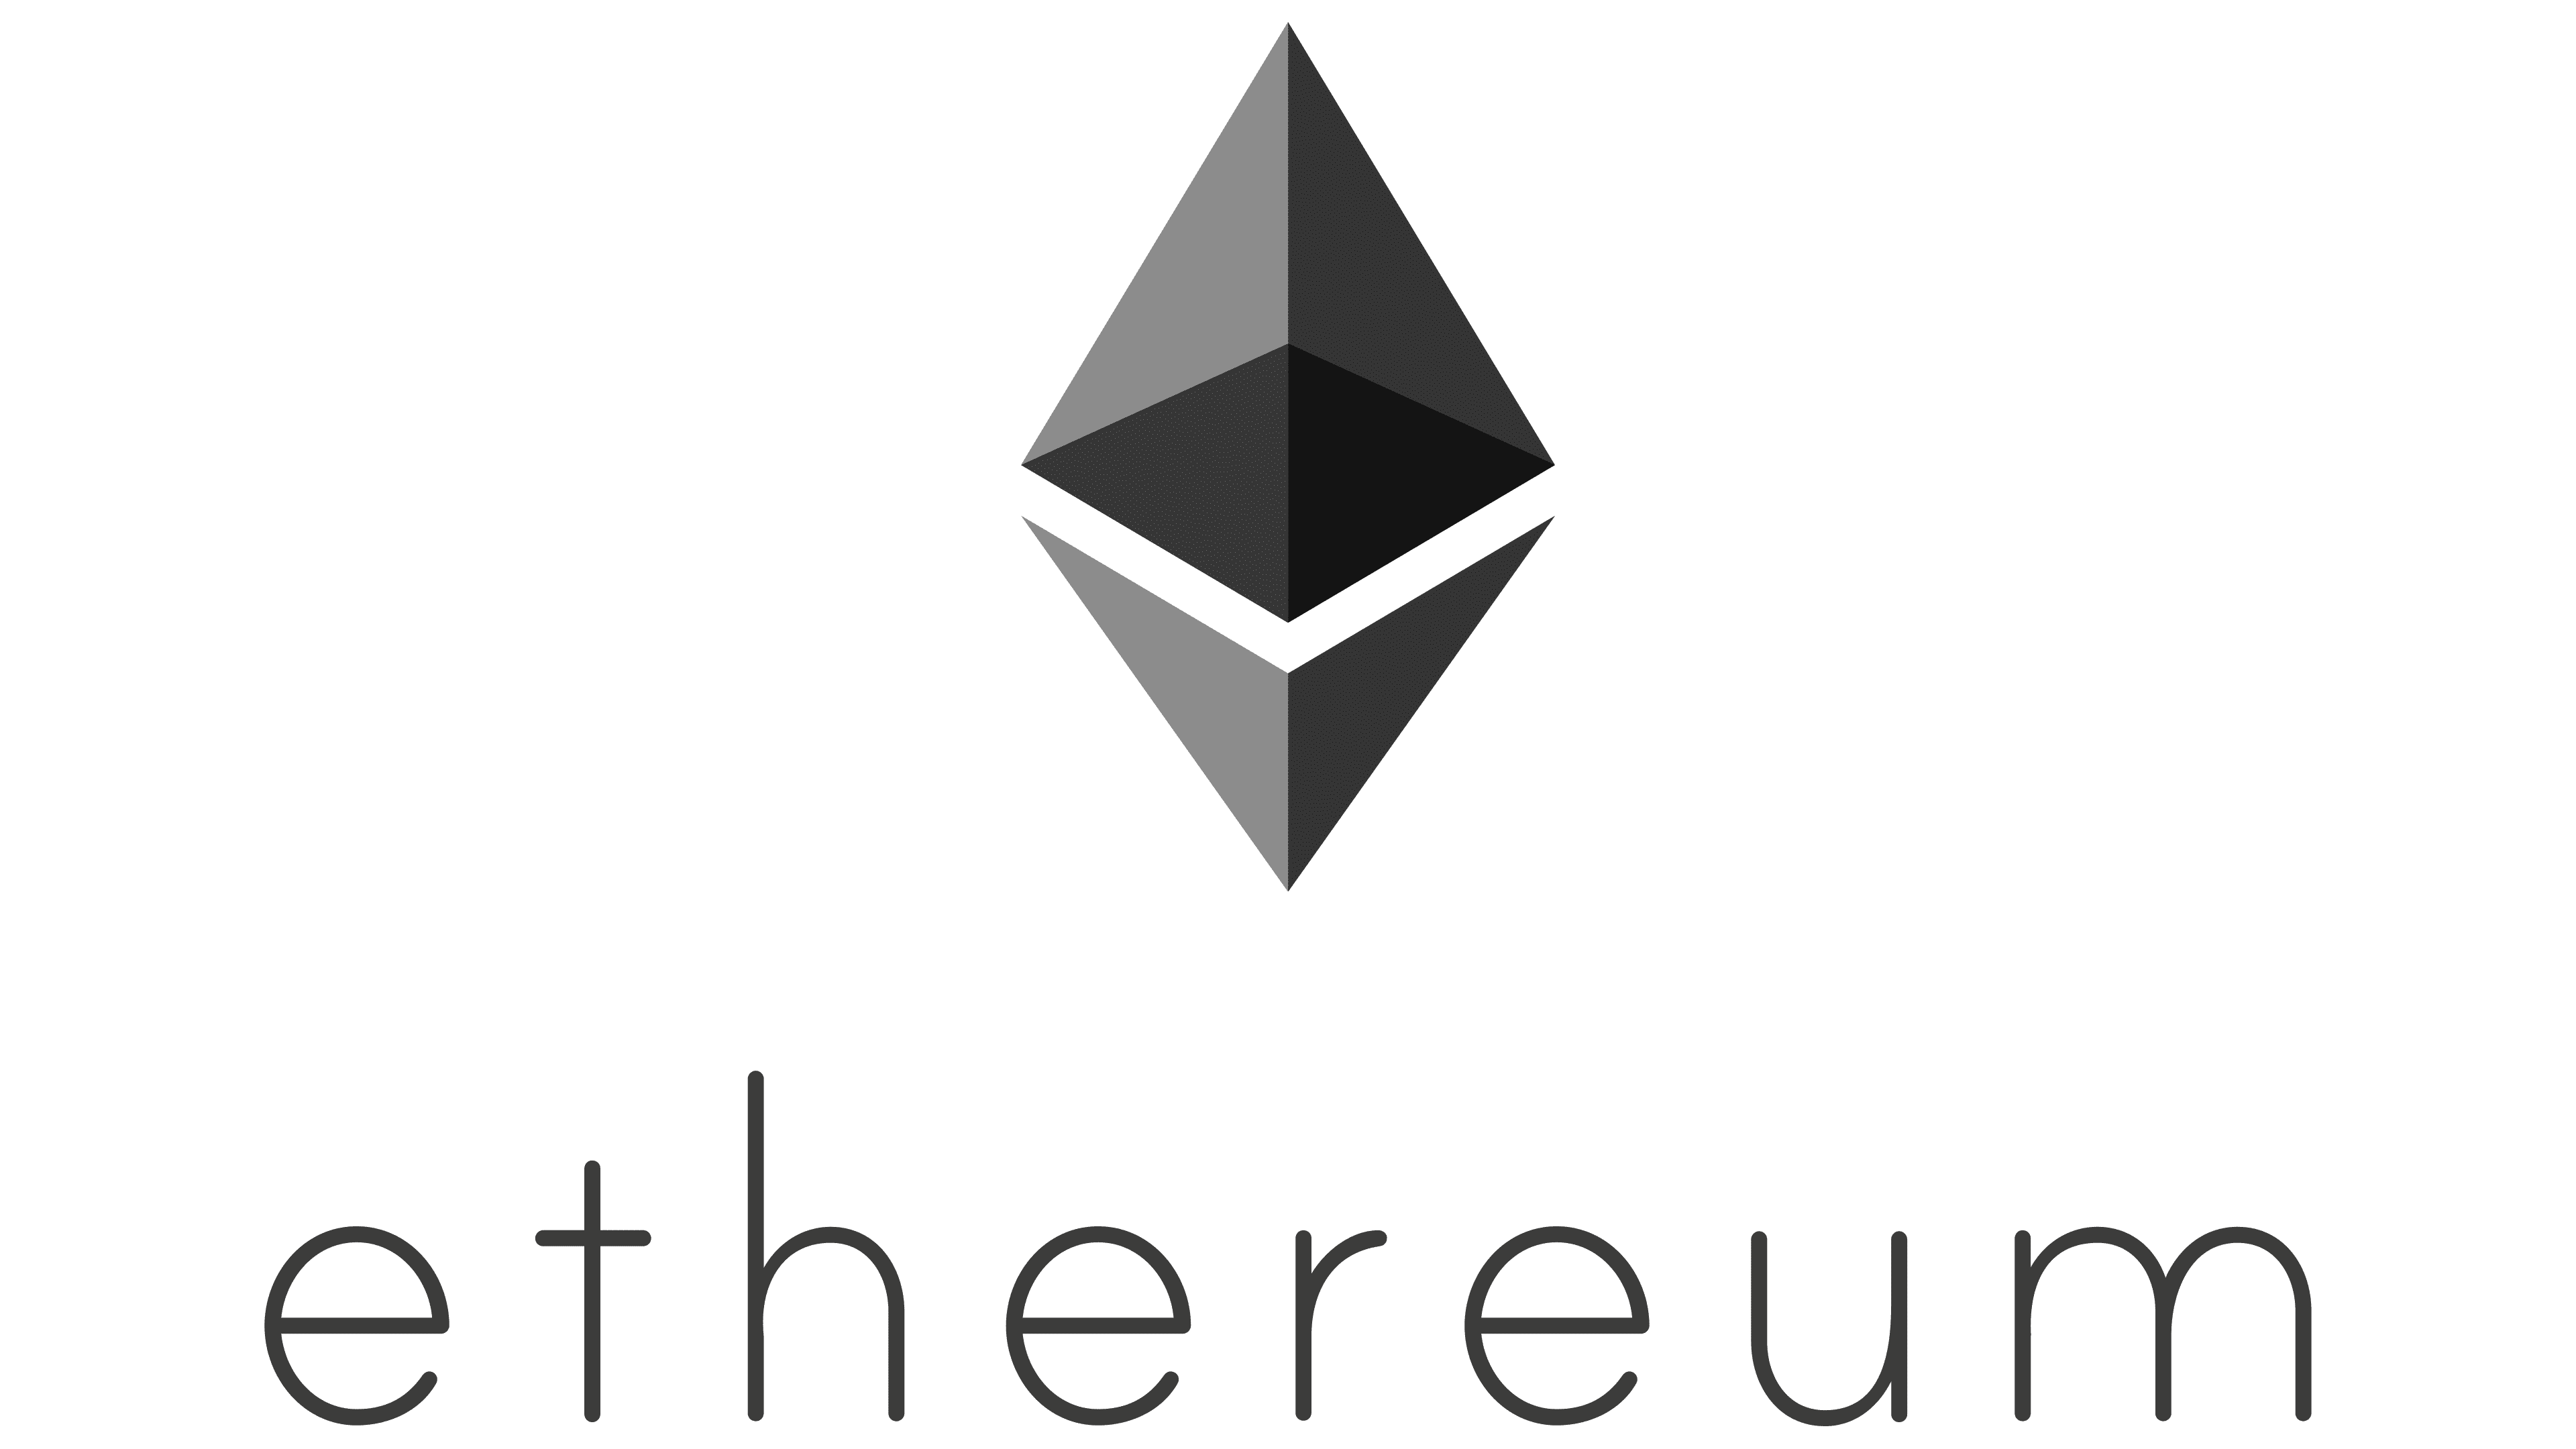 Criptocurrency - Ethereum logo